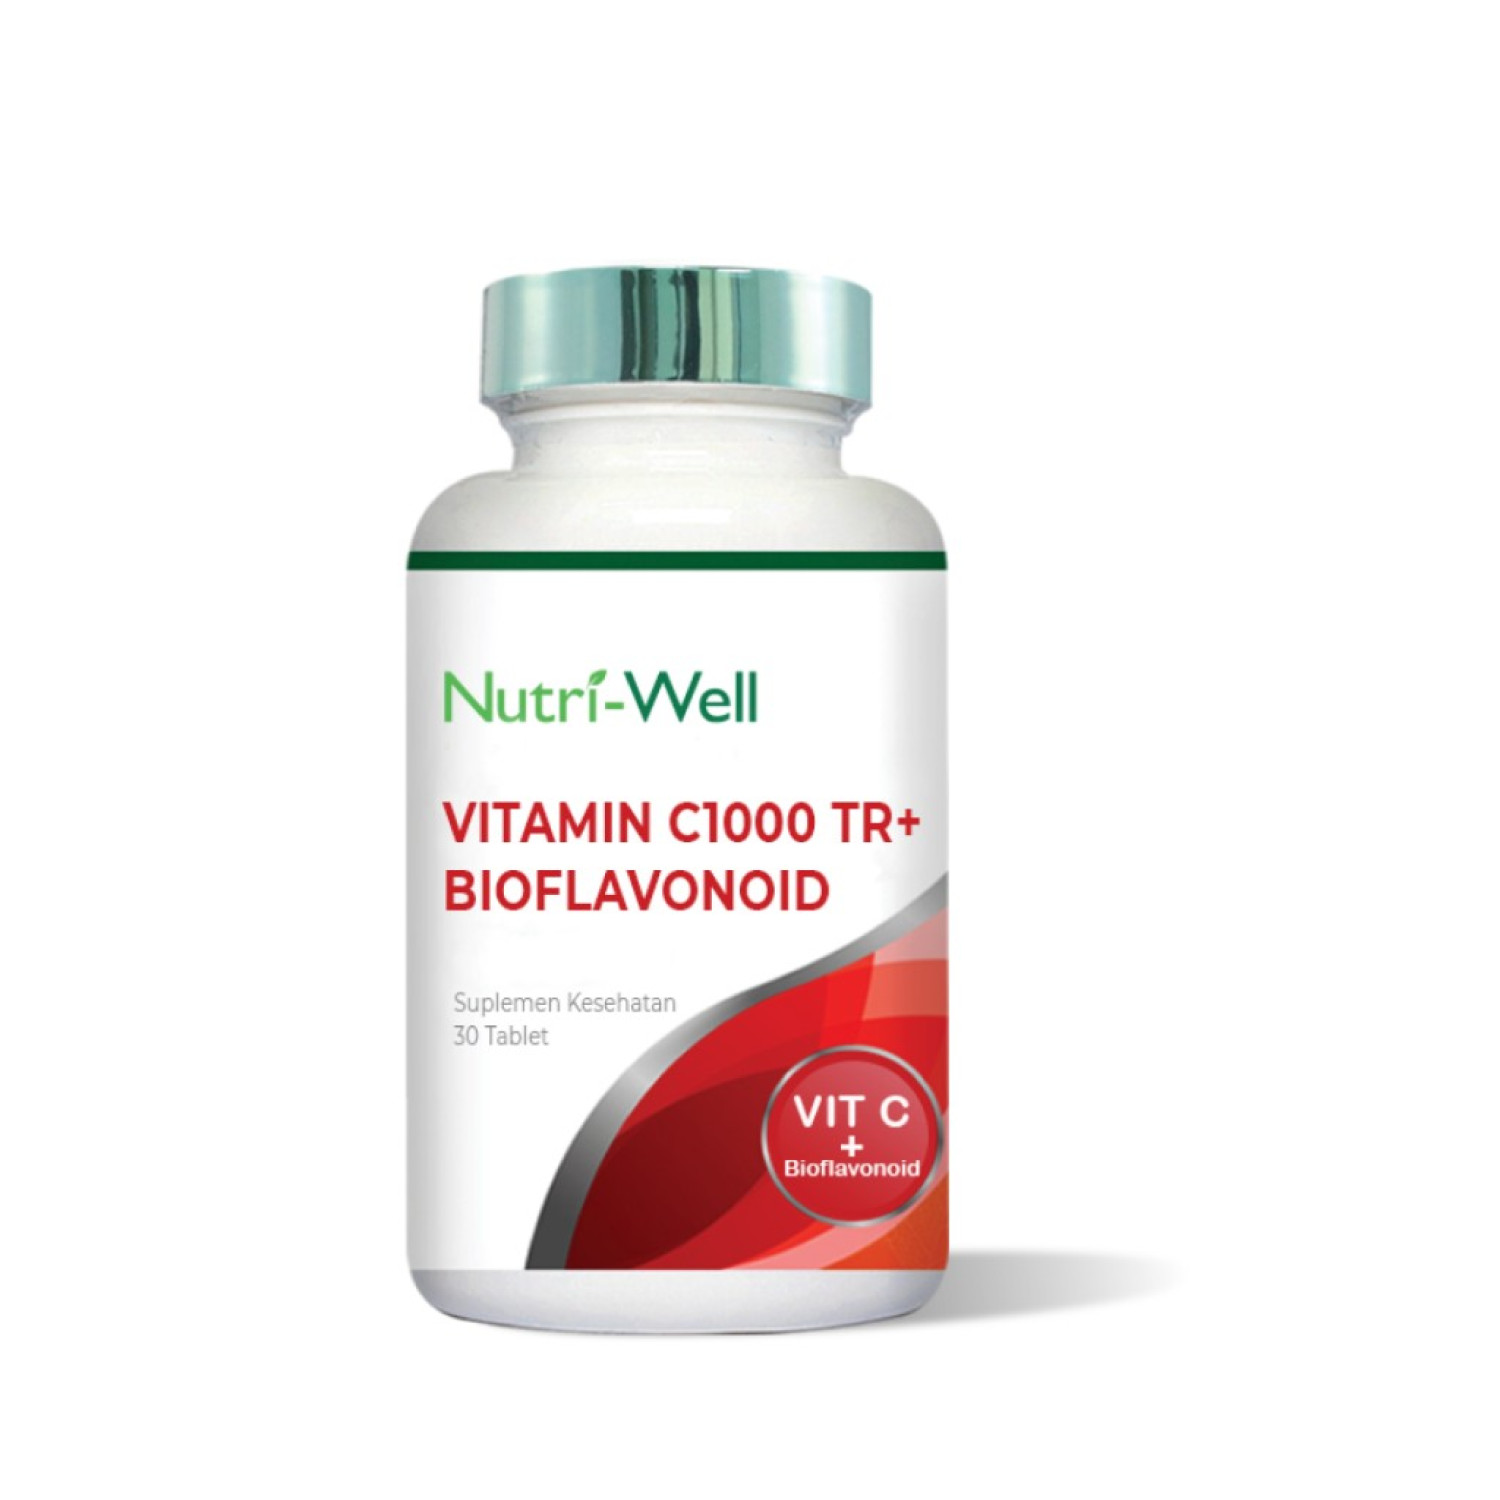 Nutriwell Nutriwell Vitamin C buffered 1000mg Time Release + Bioflavonoid